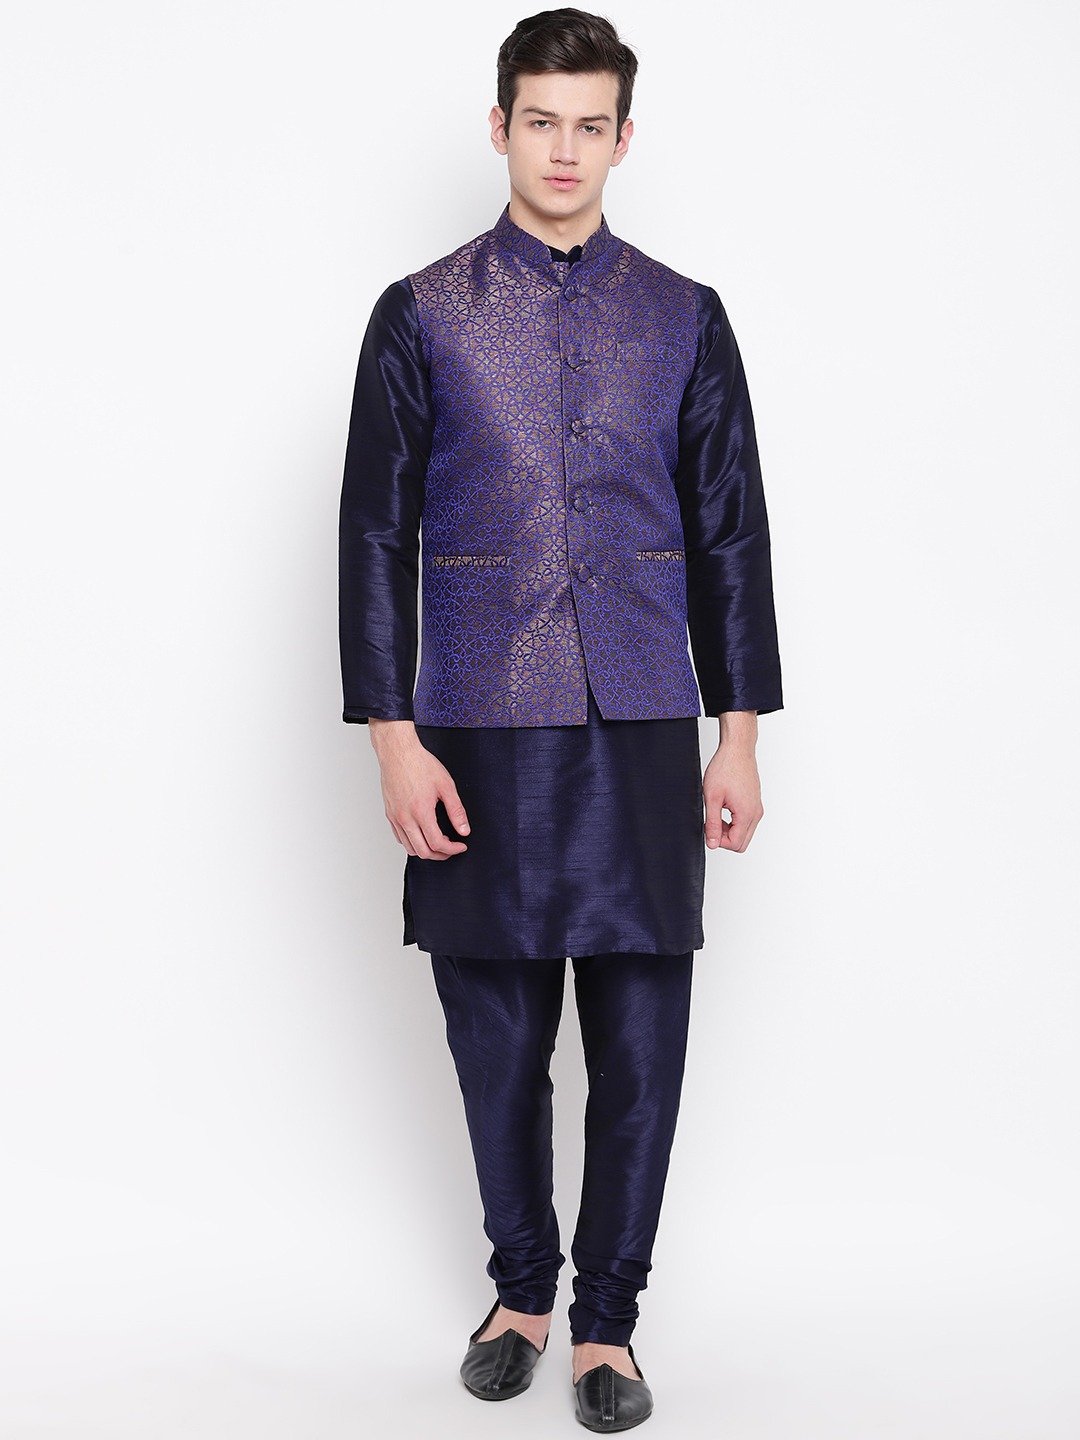 Buy Latest Indian Designer Kurta Pyjama With Jacket online at best